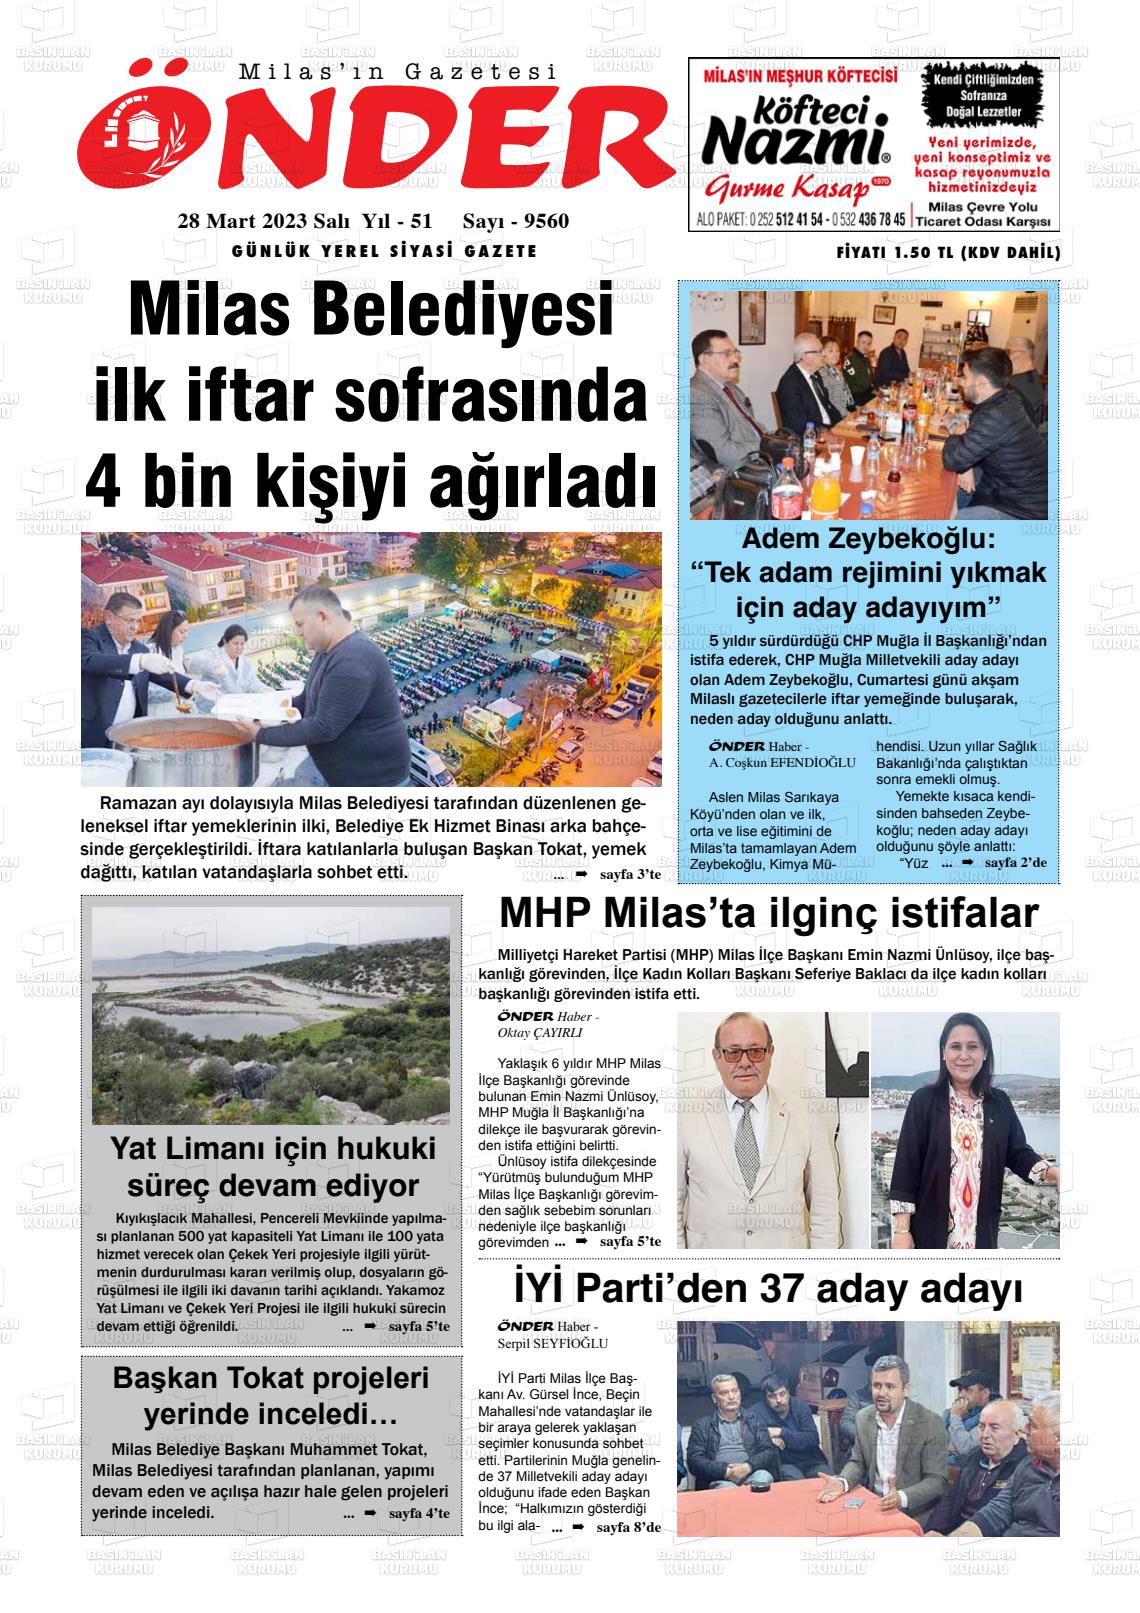 28 Mart 2023 Milas Önder Gazete Manşeti